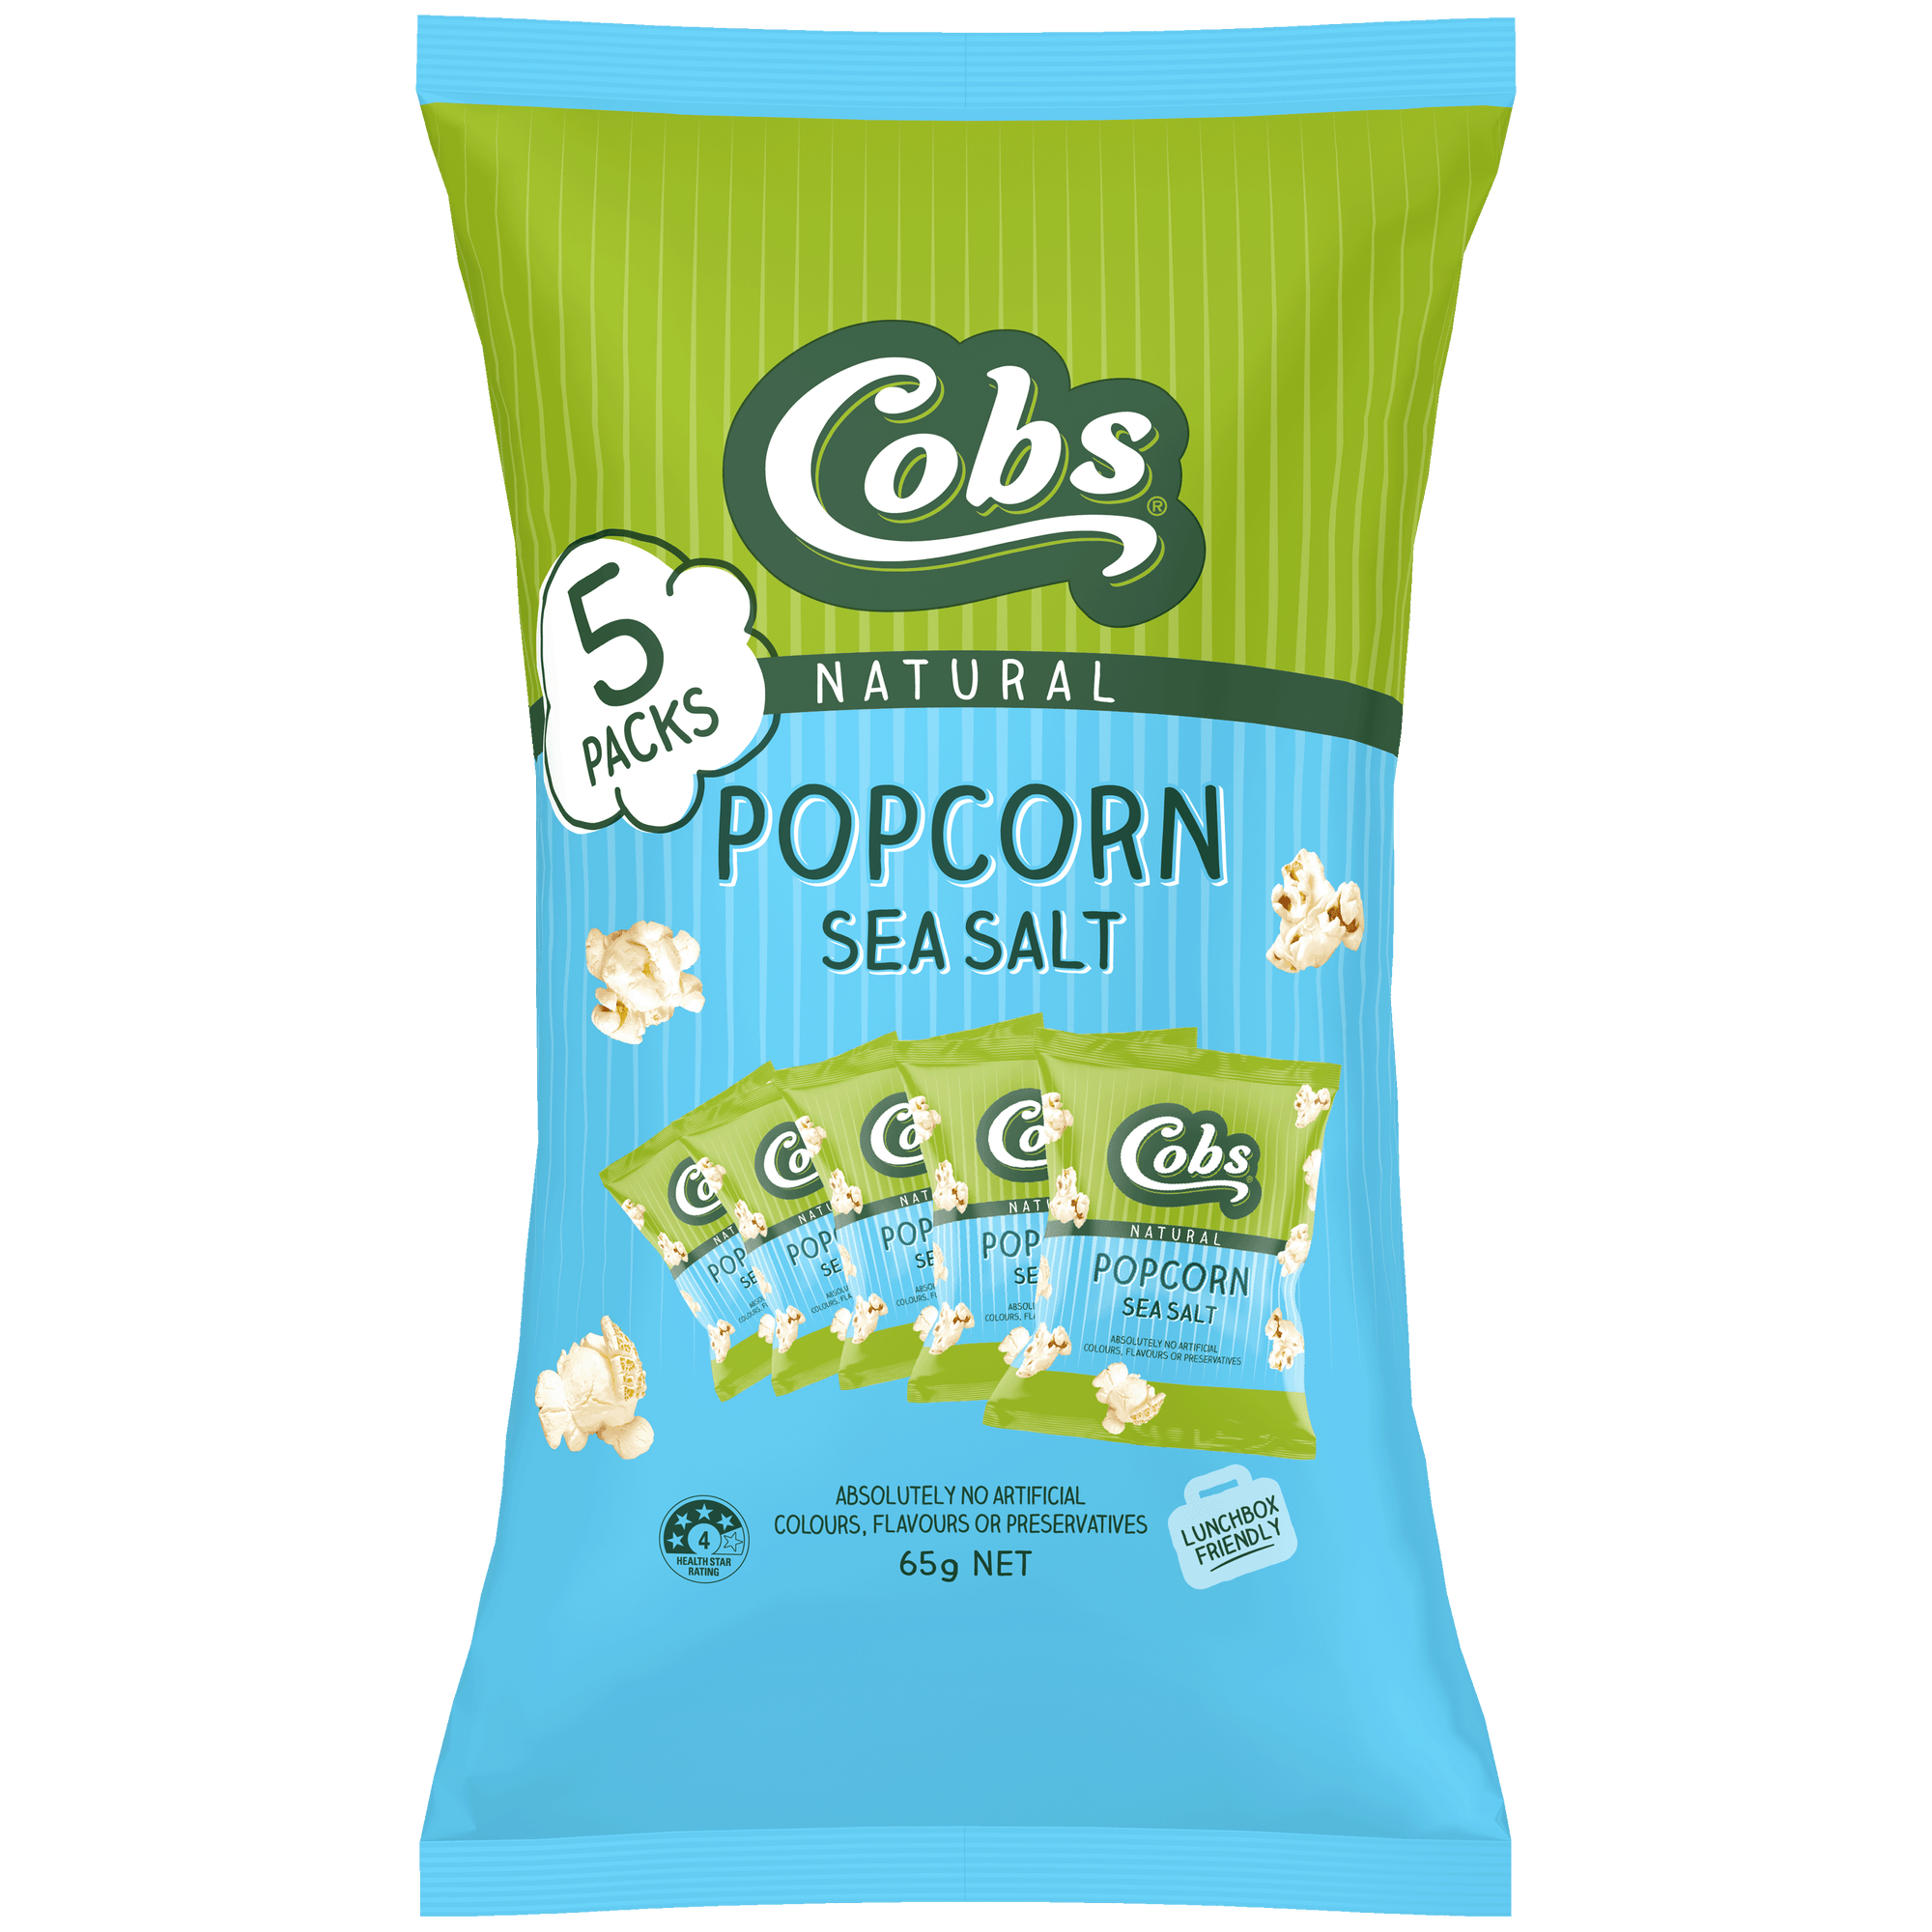 Cobs Popcorn Sea Salt 5pk 65g